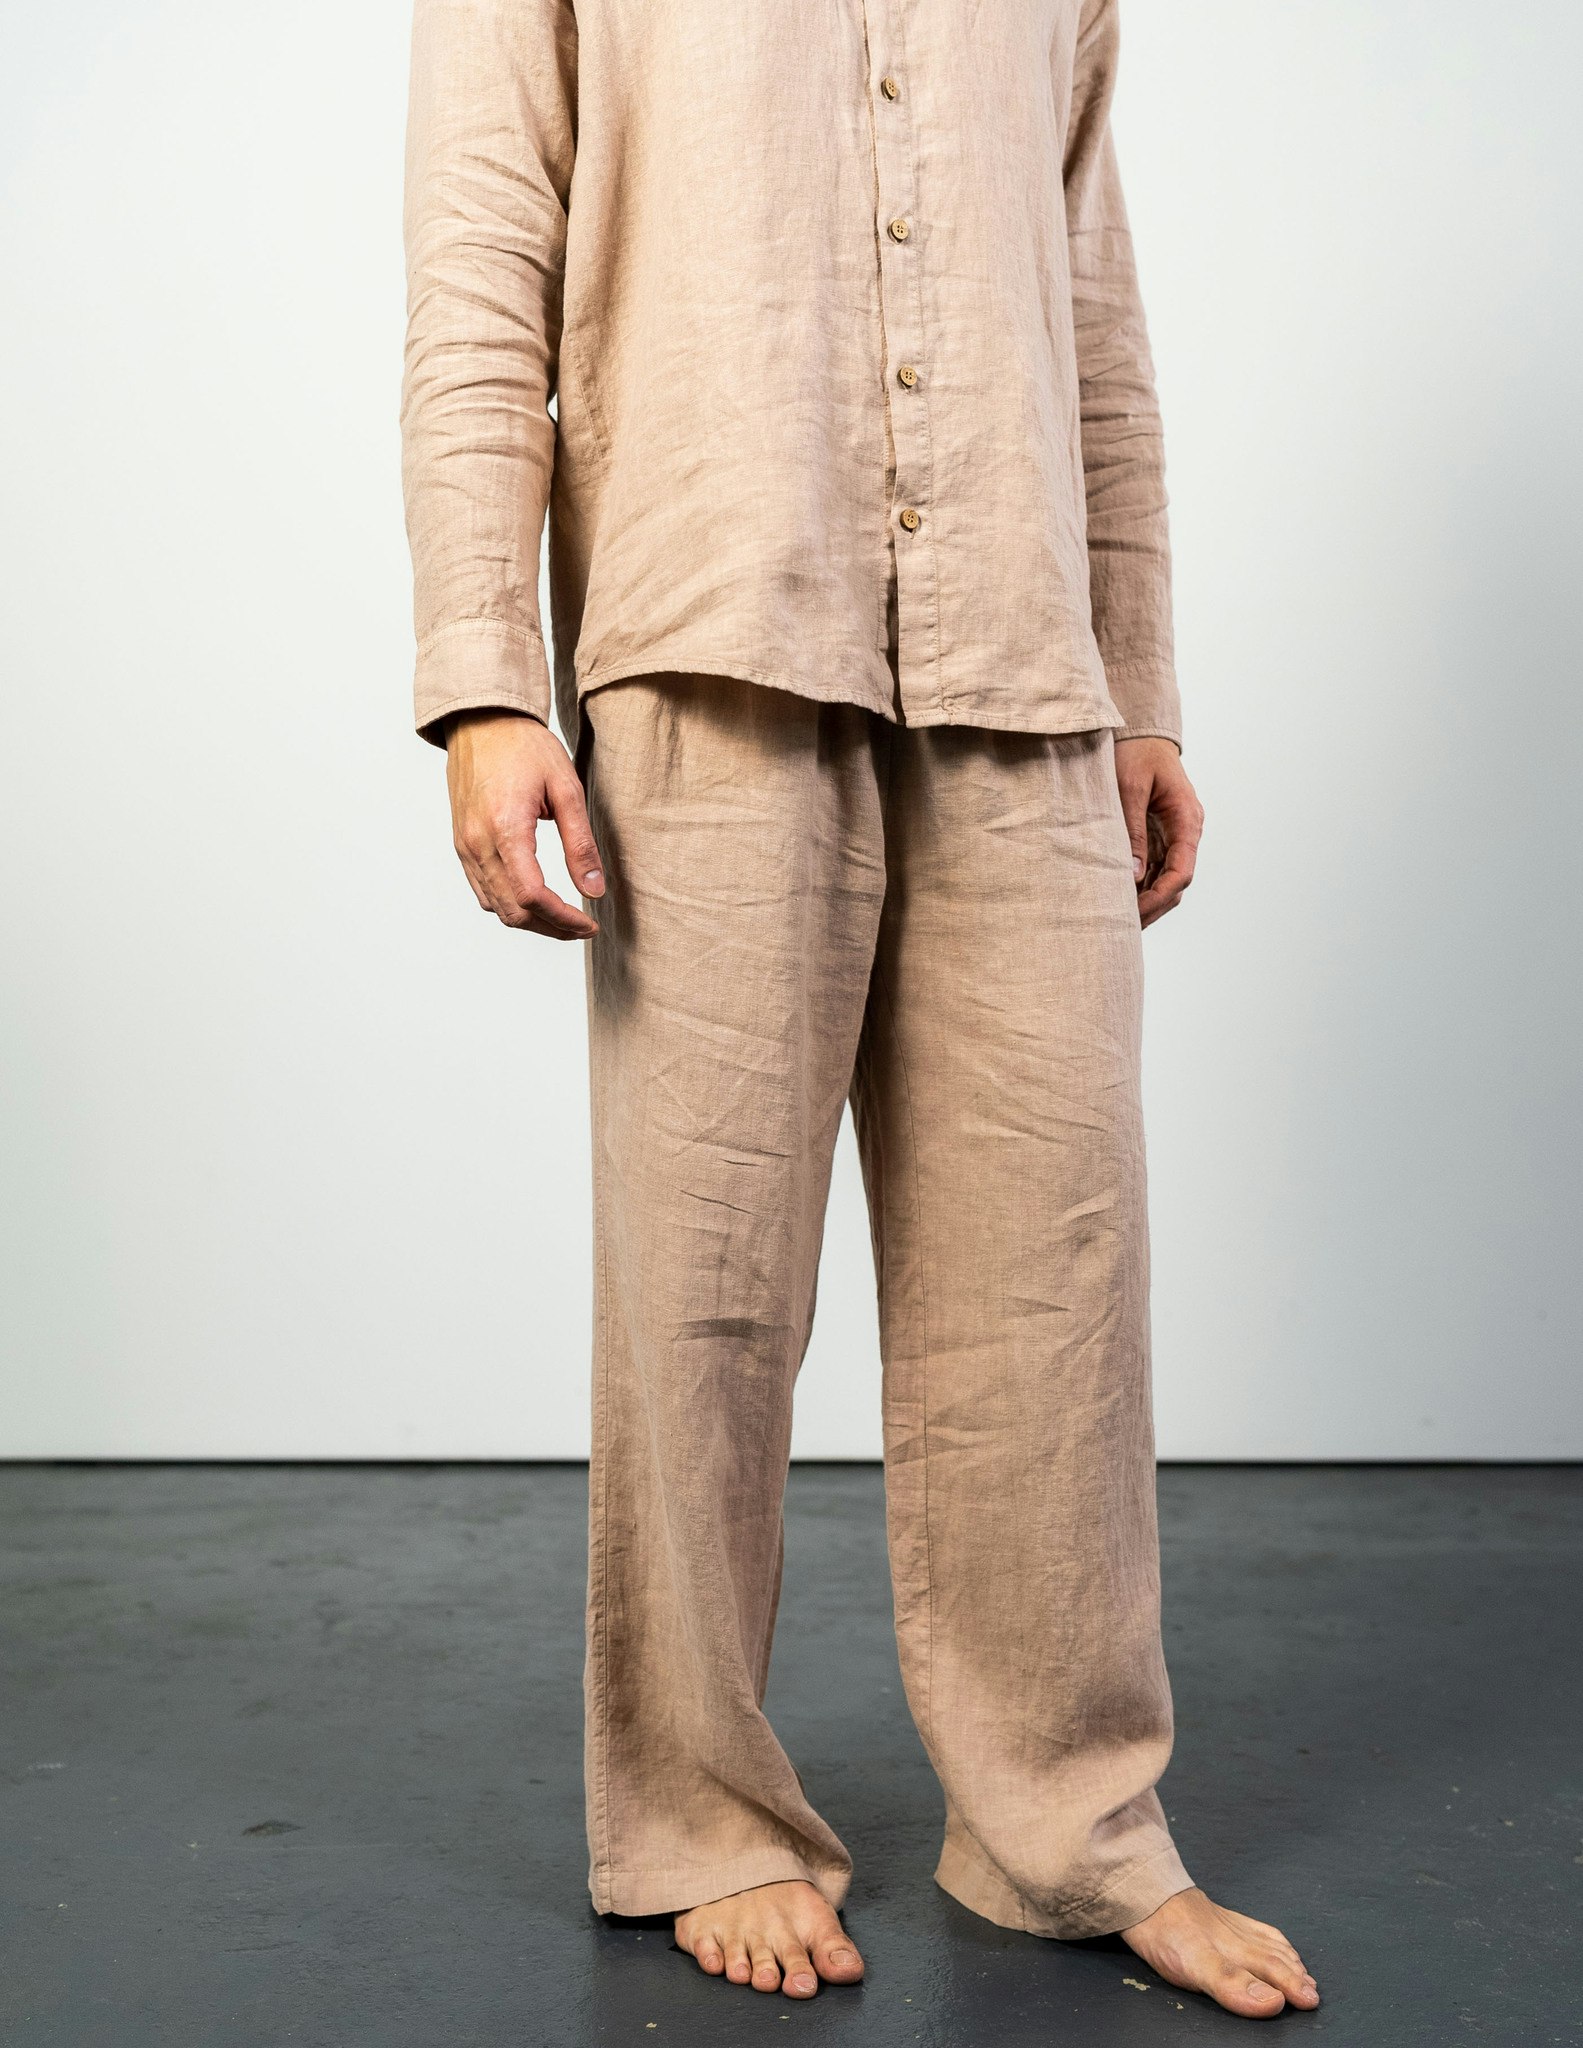 Beige linen linen trousers men I Linen pants for men sand SOONA Collection  - Soonacollection.com